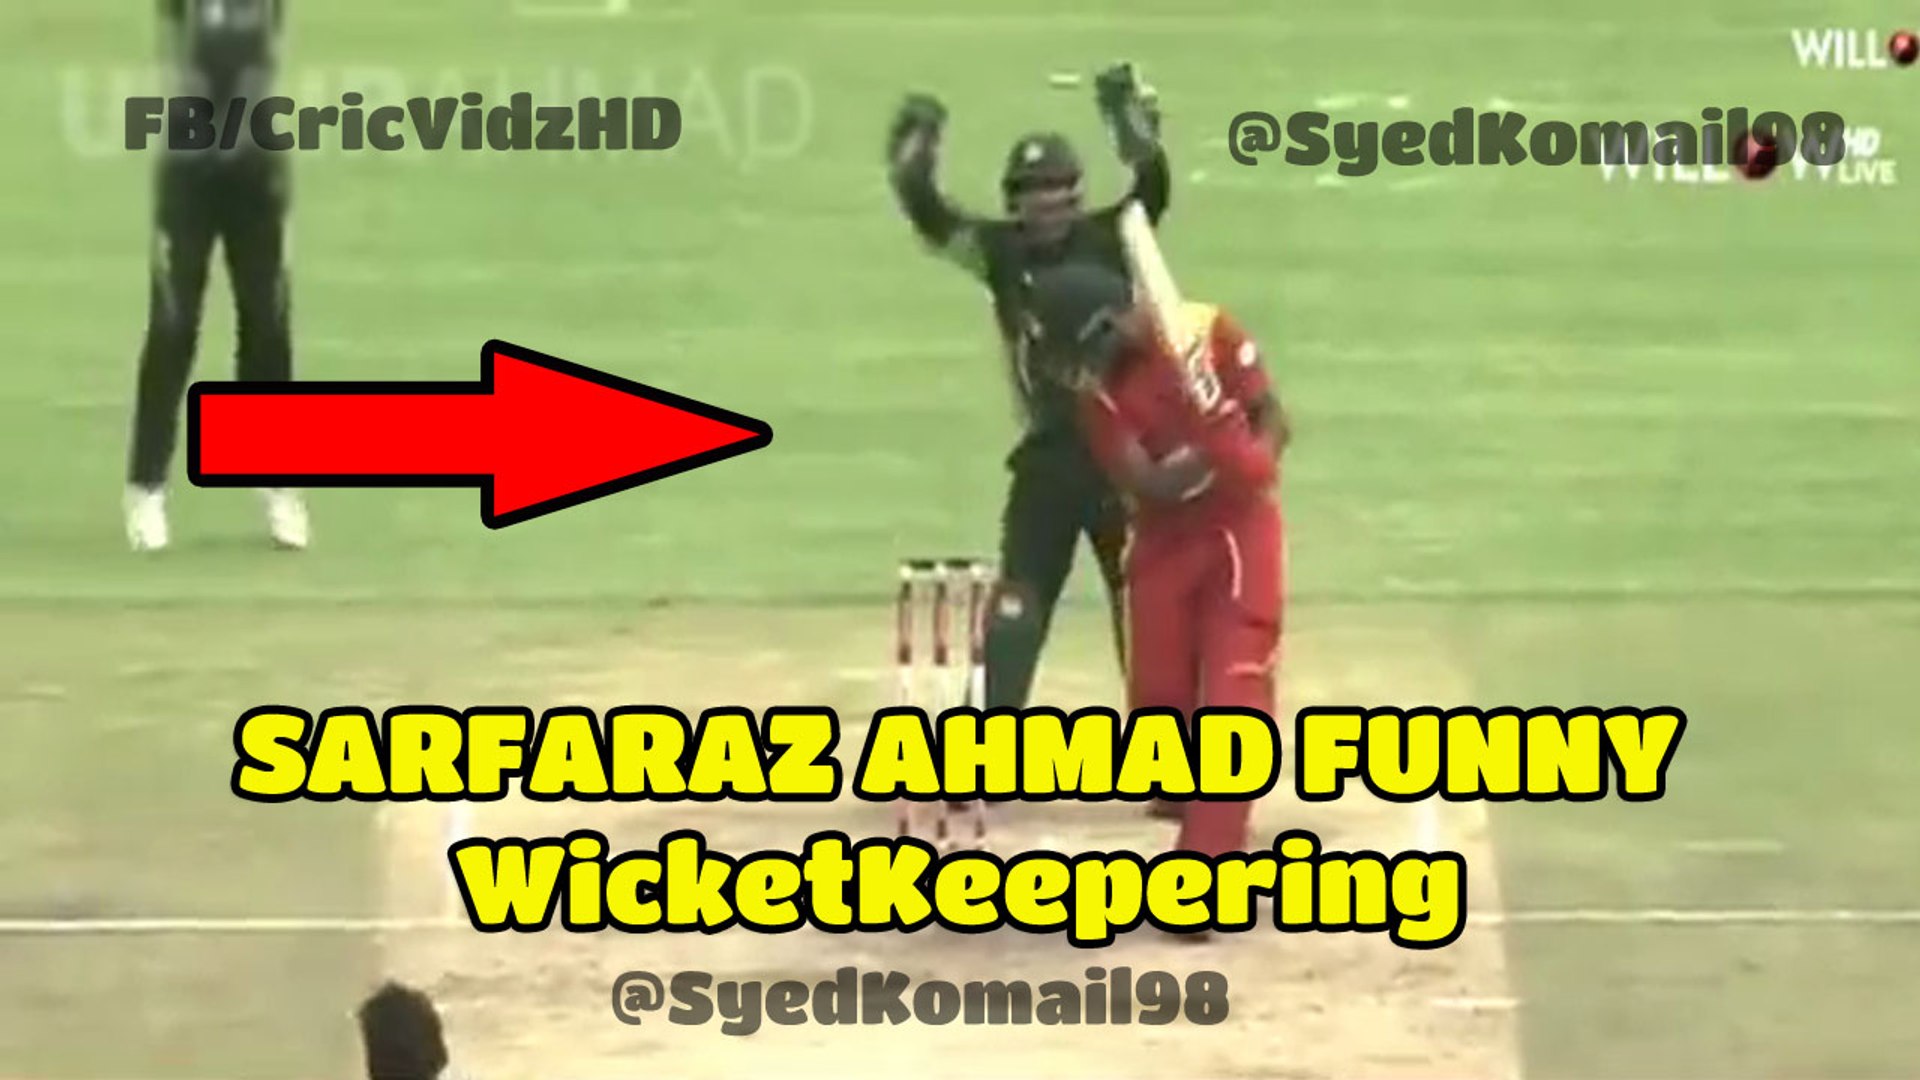 Sarfraz Ahmed Funny Wicket Keepering - video Dailymotion